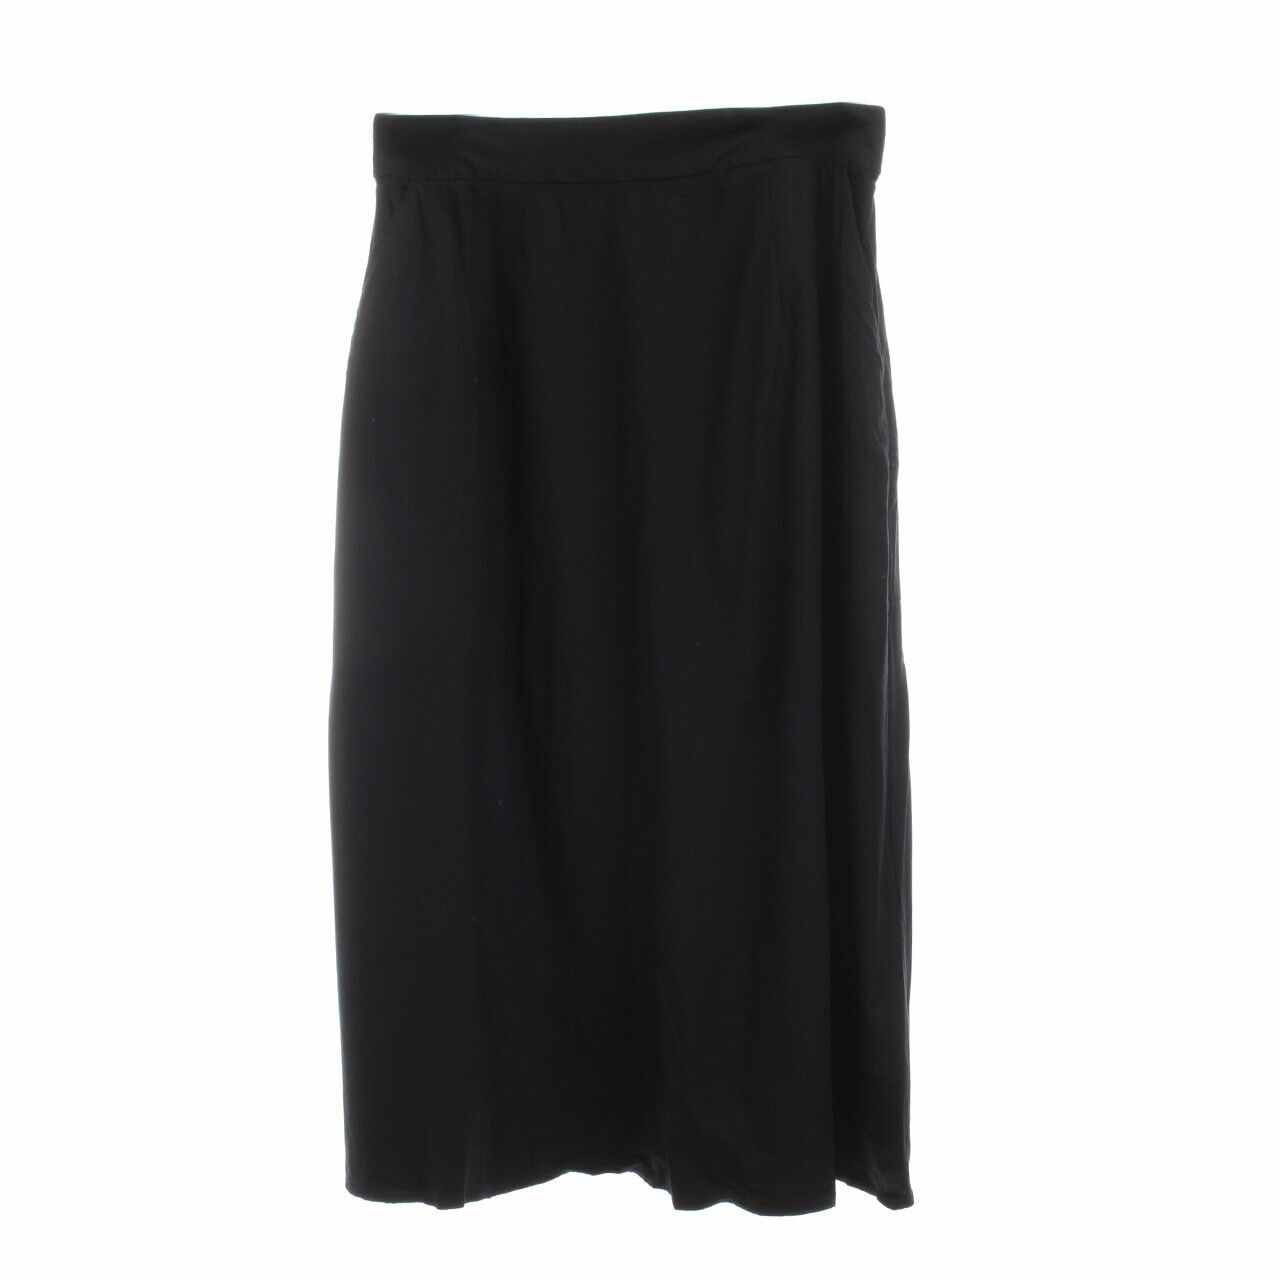 Kle Black Maxi Skirt